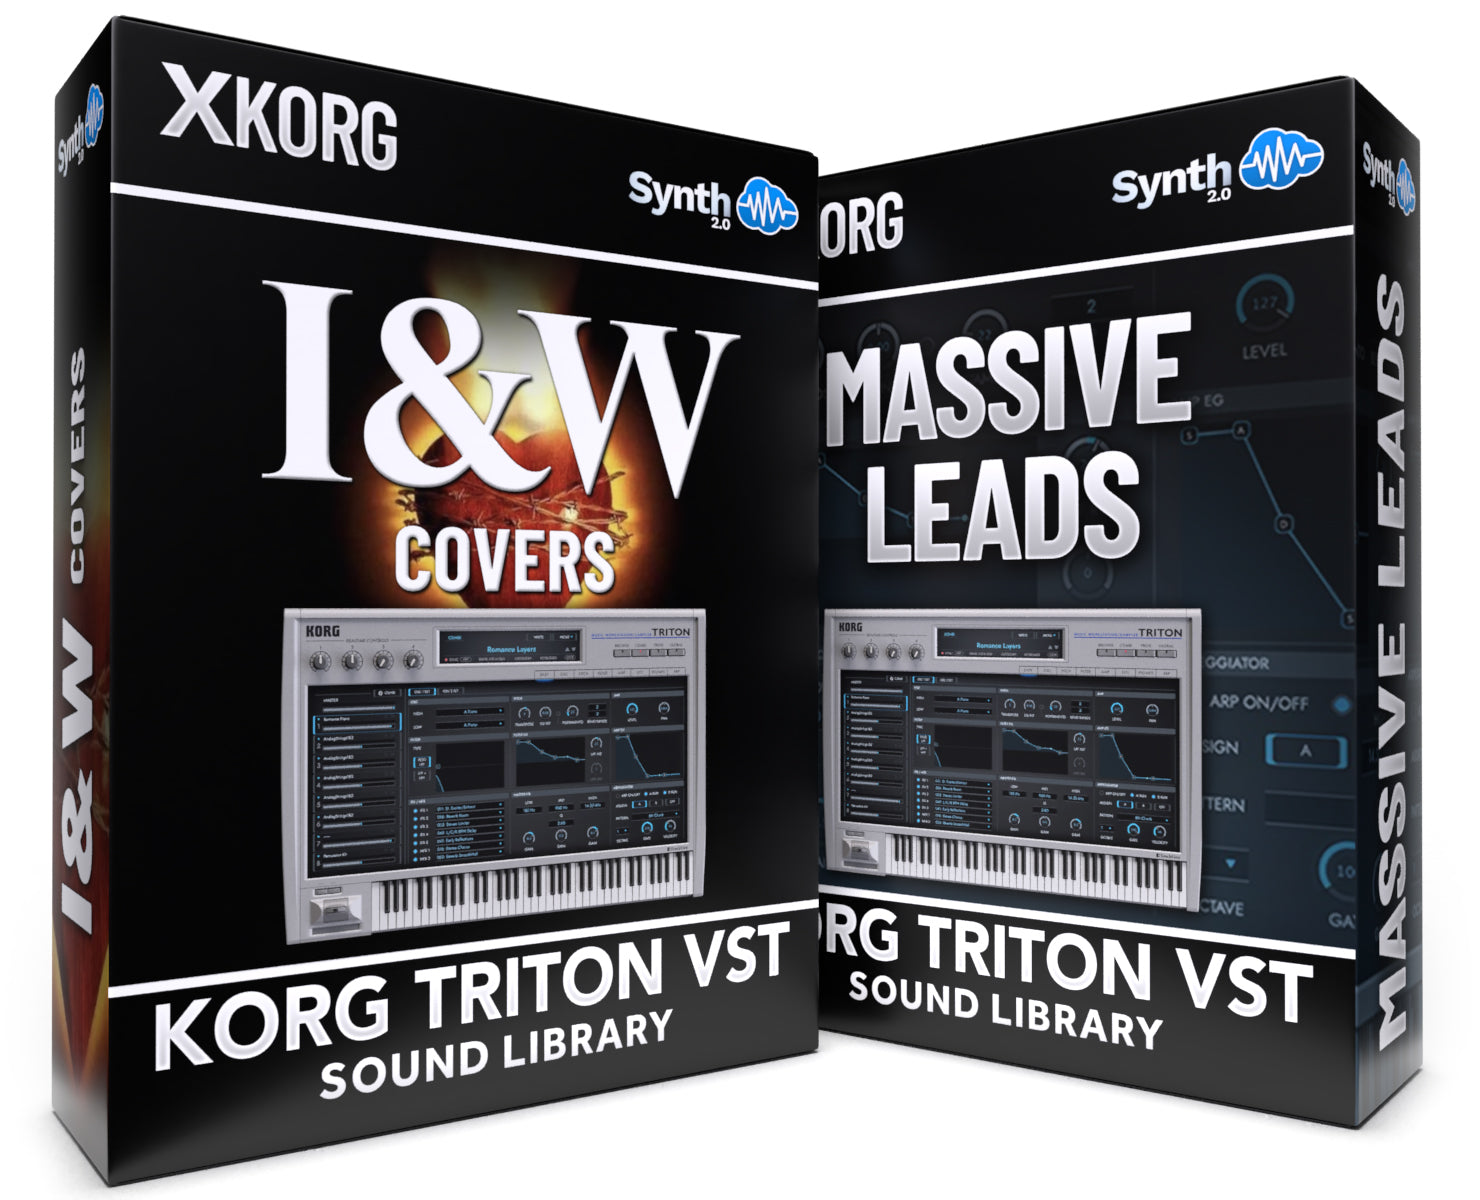 LDX223 - ( Bundle ) - I&W Covers + Massive Leads - Korg TRITON VST / TRITON EXTREME VST